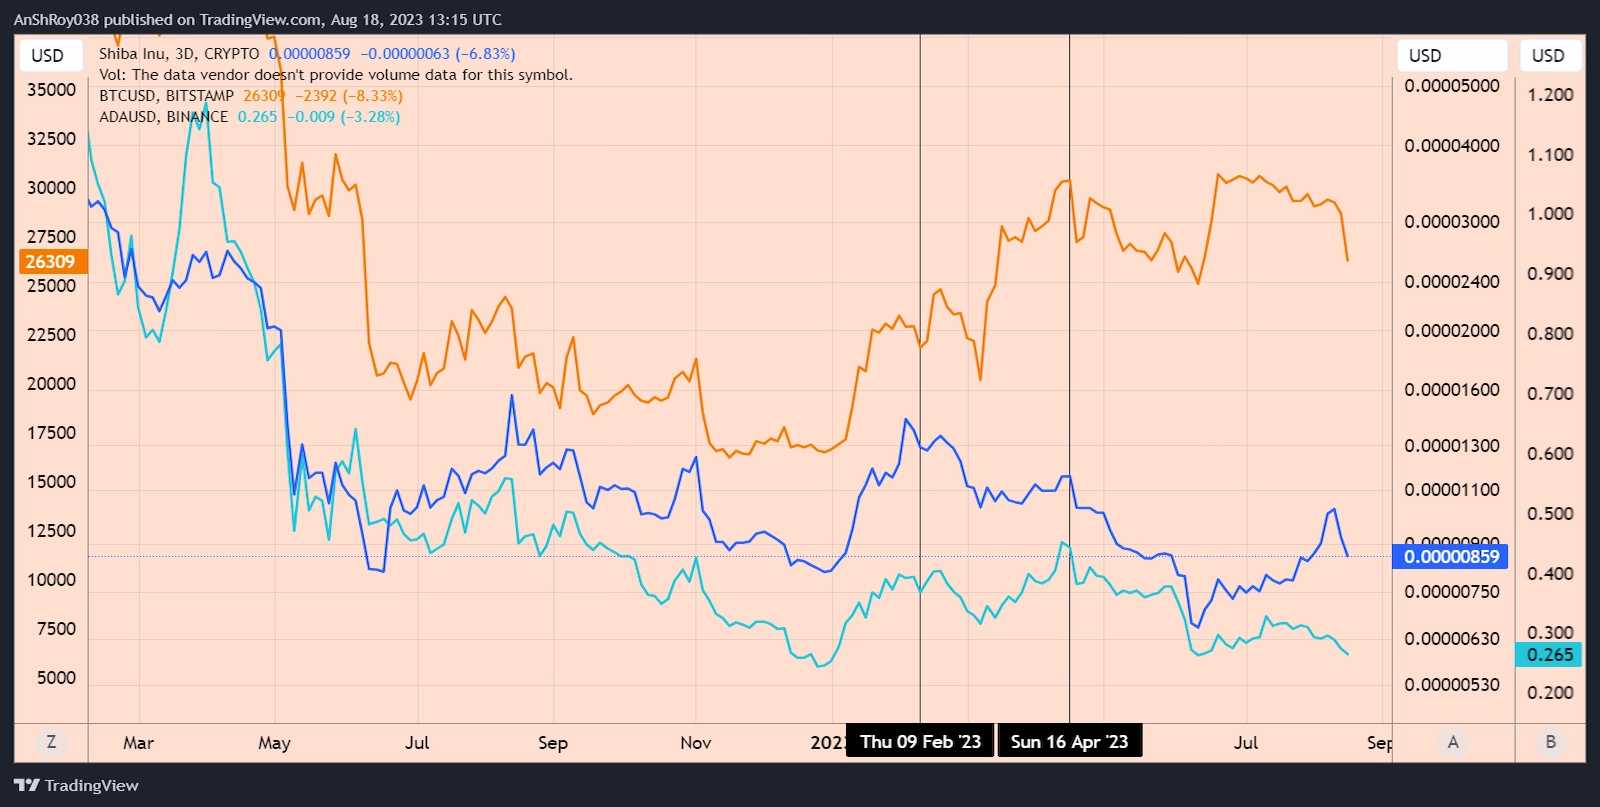 Correlation between ADA, SHIB, and BTC prices